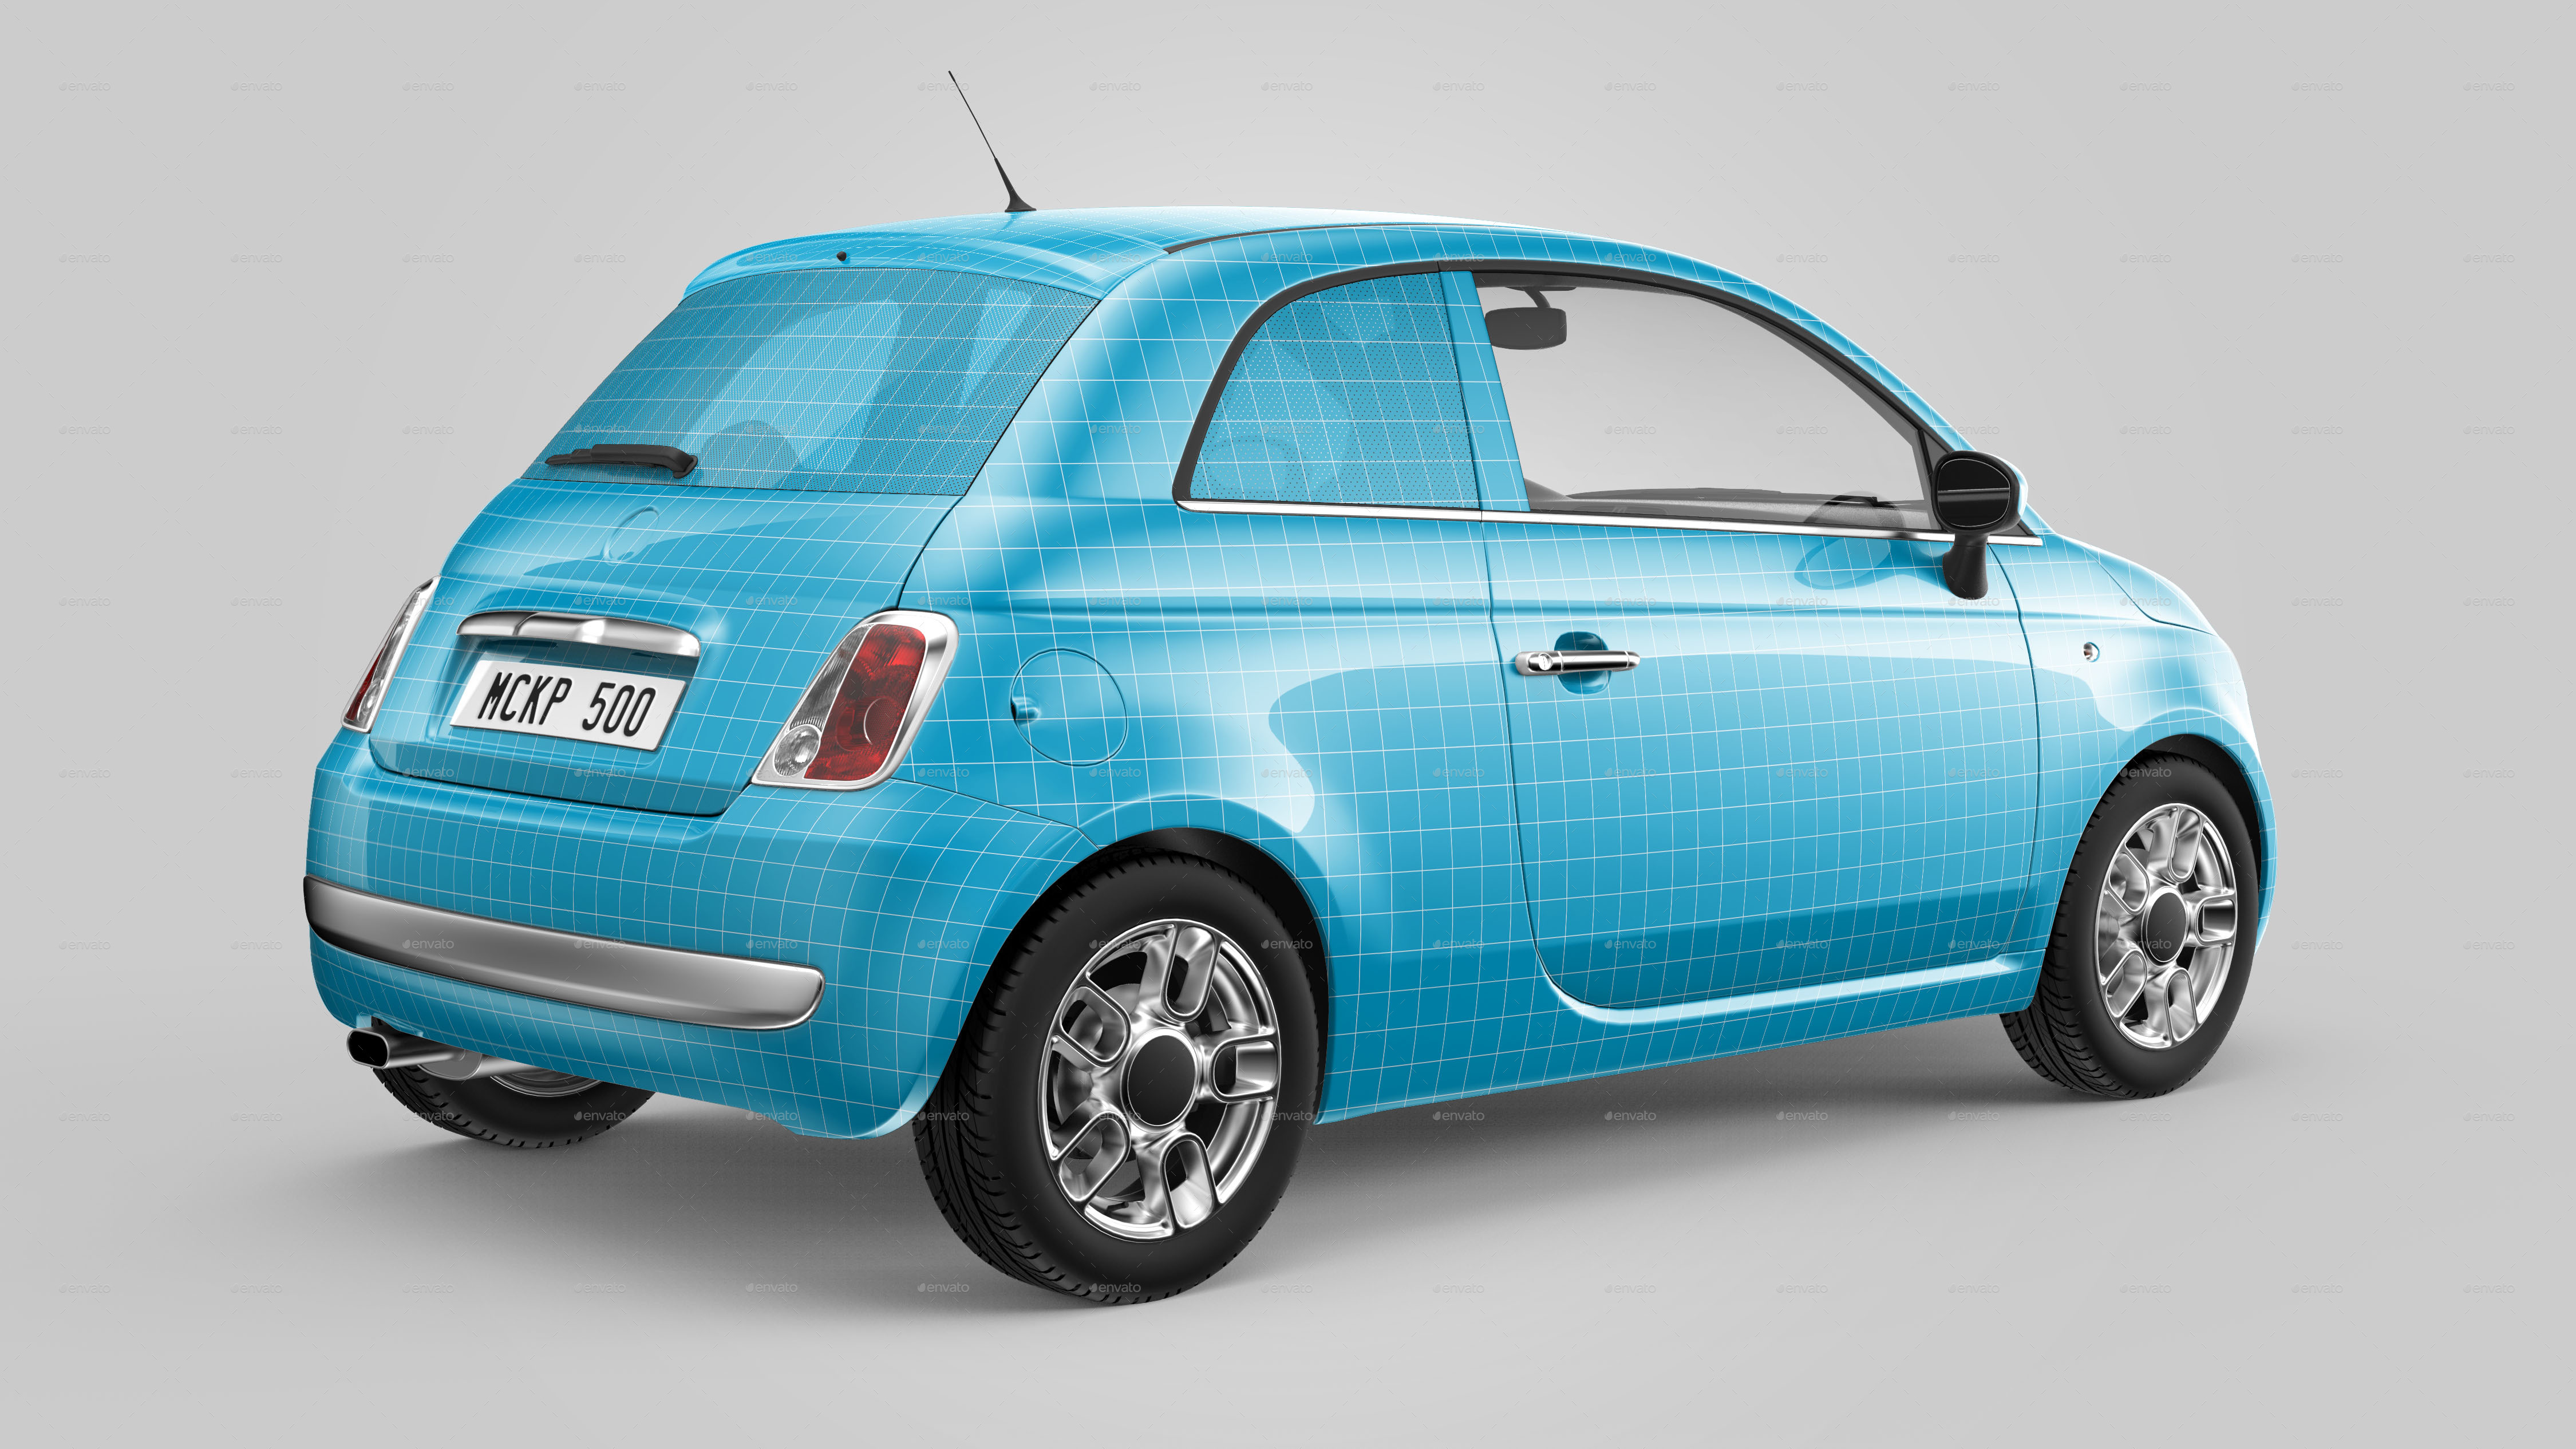 Download 53+ Free PSD Realistic High Quality Car & Vehicle Mockups ... PSD Mockup Templates